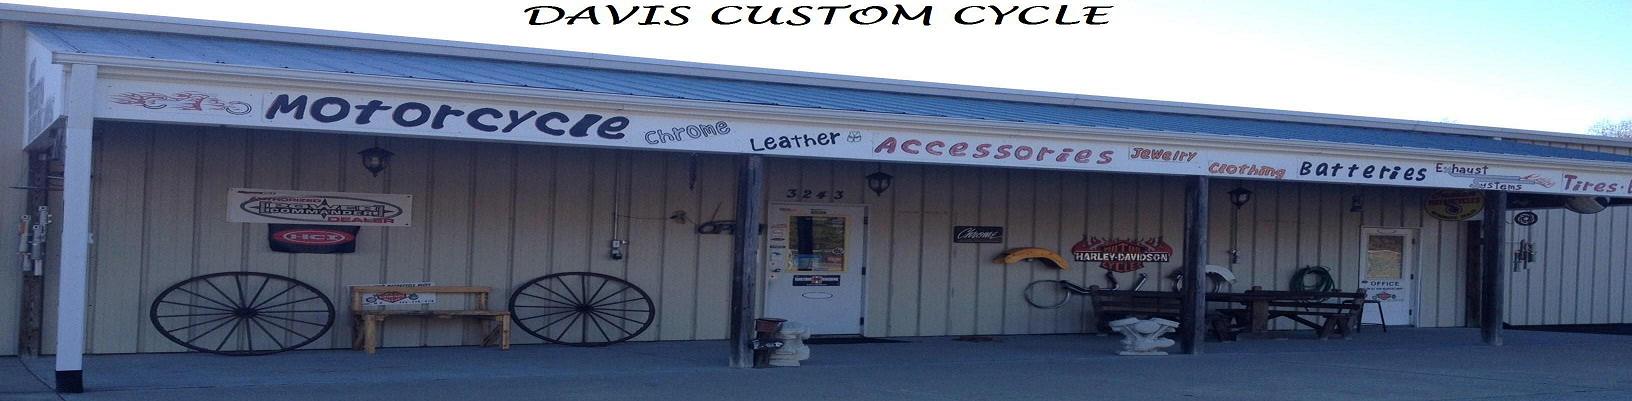 Davis Custom Cycle - Davis Self Storage